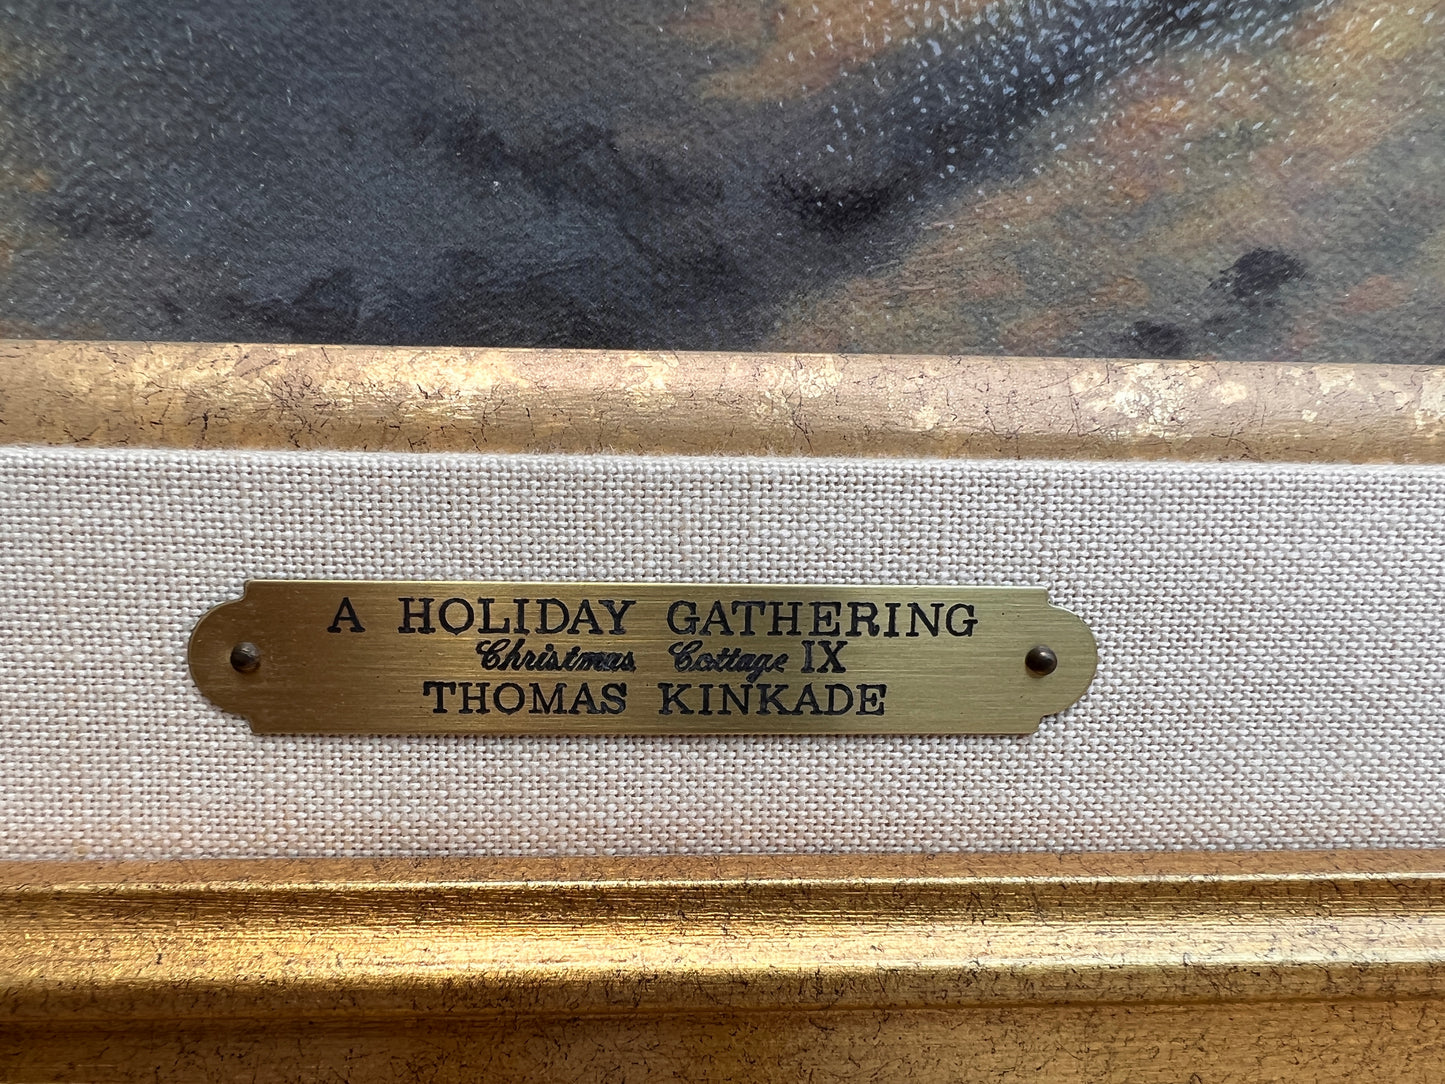 Thomas Kinkade "Holiday Gathering" on S/N Canvas, 25.5" x 34" Limited 187/6950